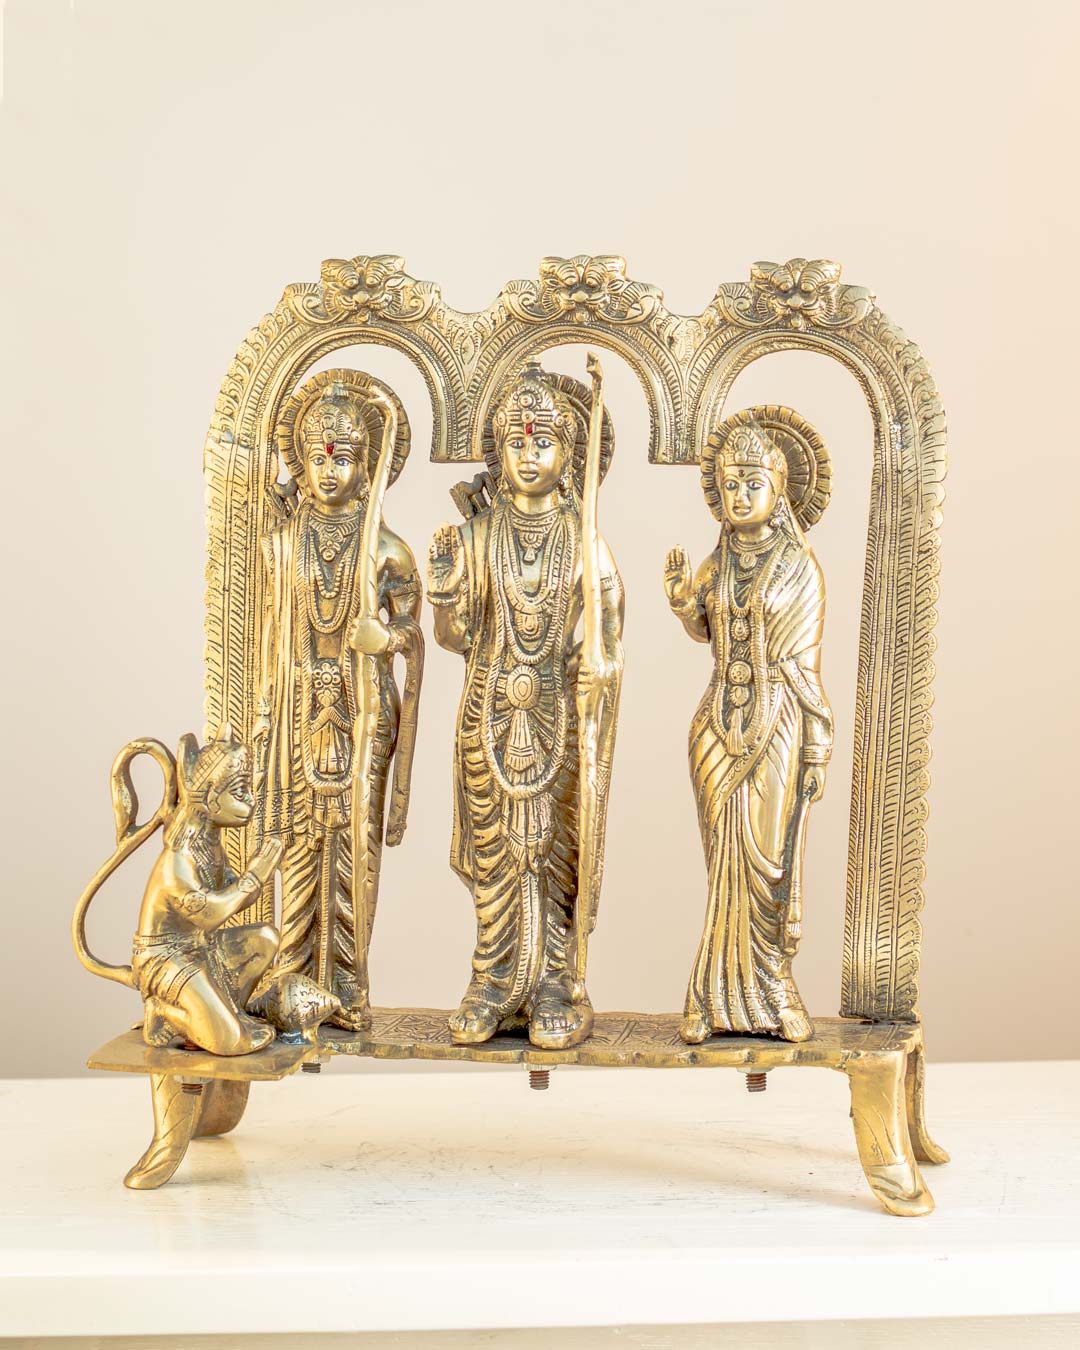 Marvelous 'Ram Darbar' Table Top sculpture